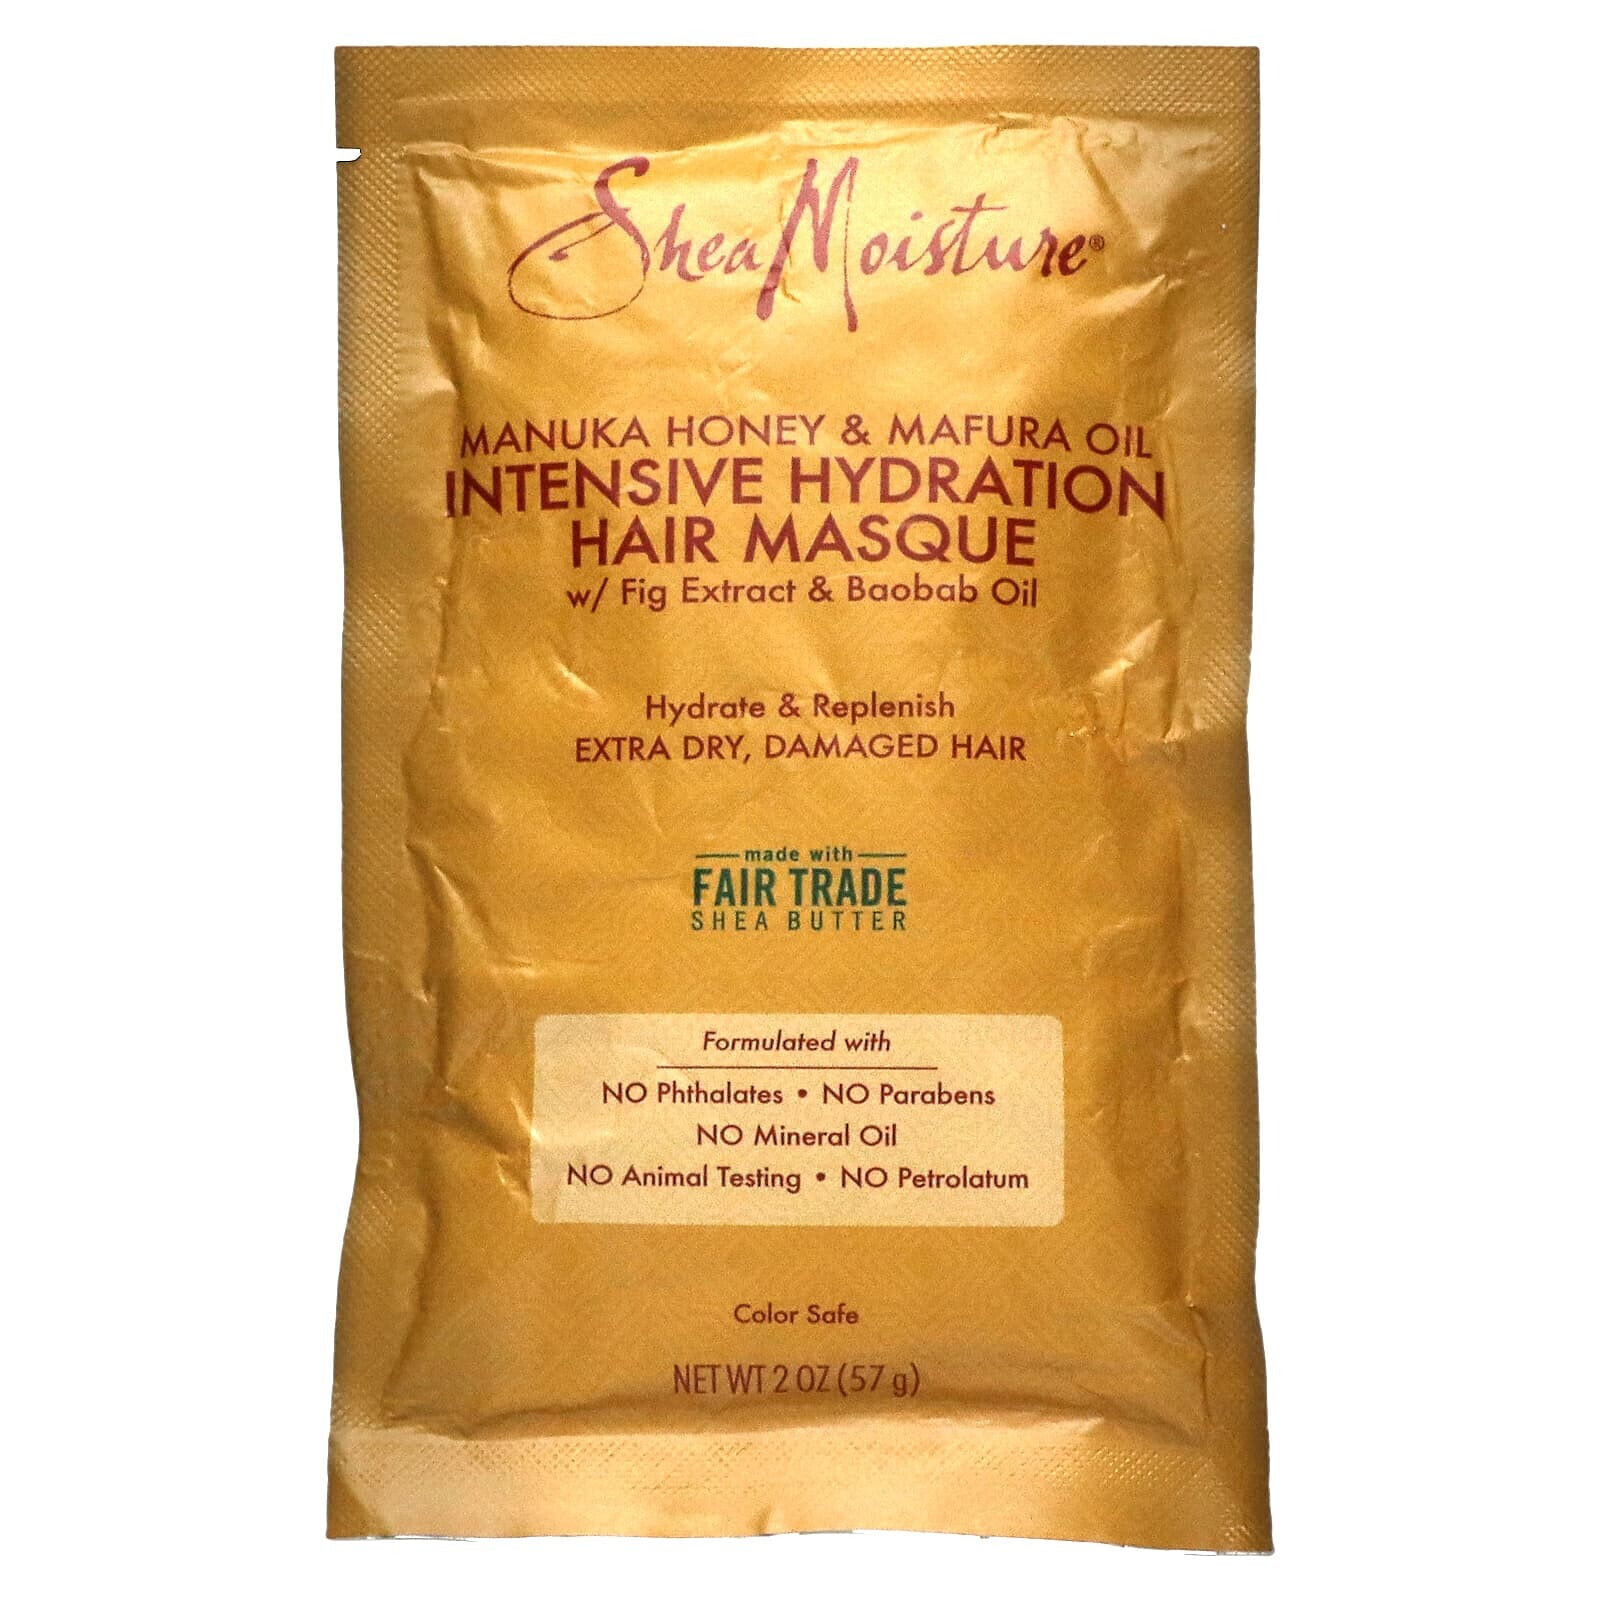 Manuka Honey & Mafura Oil Intensive Hydration Hair Masque, 2 oz (57 g)